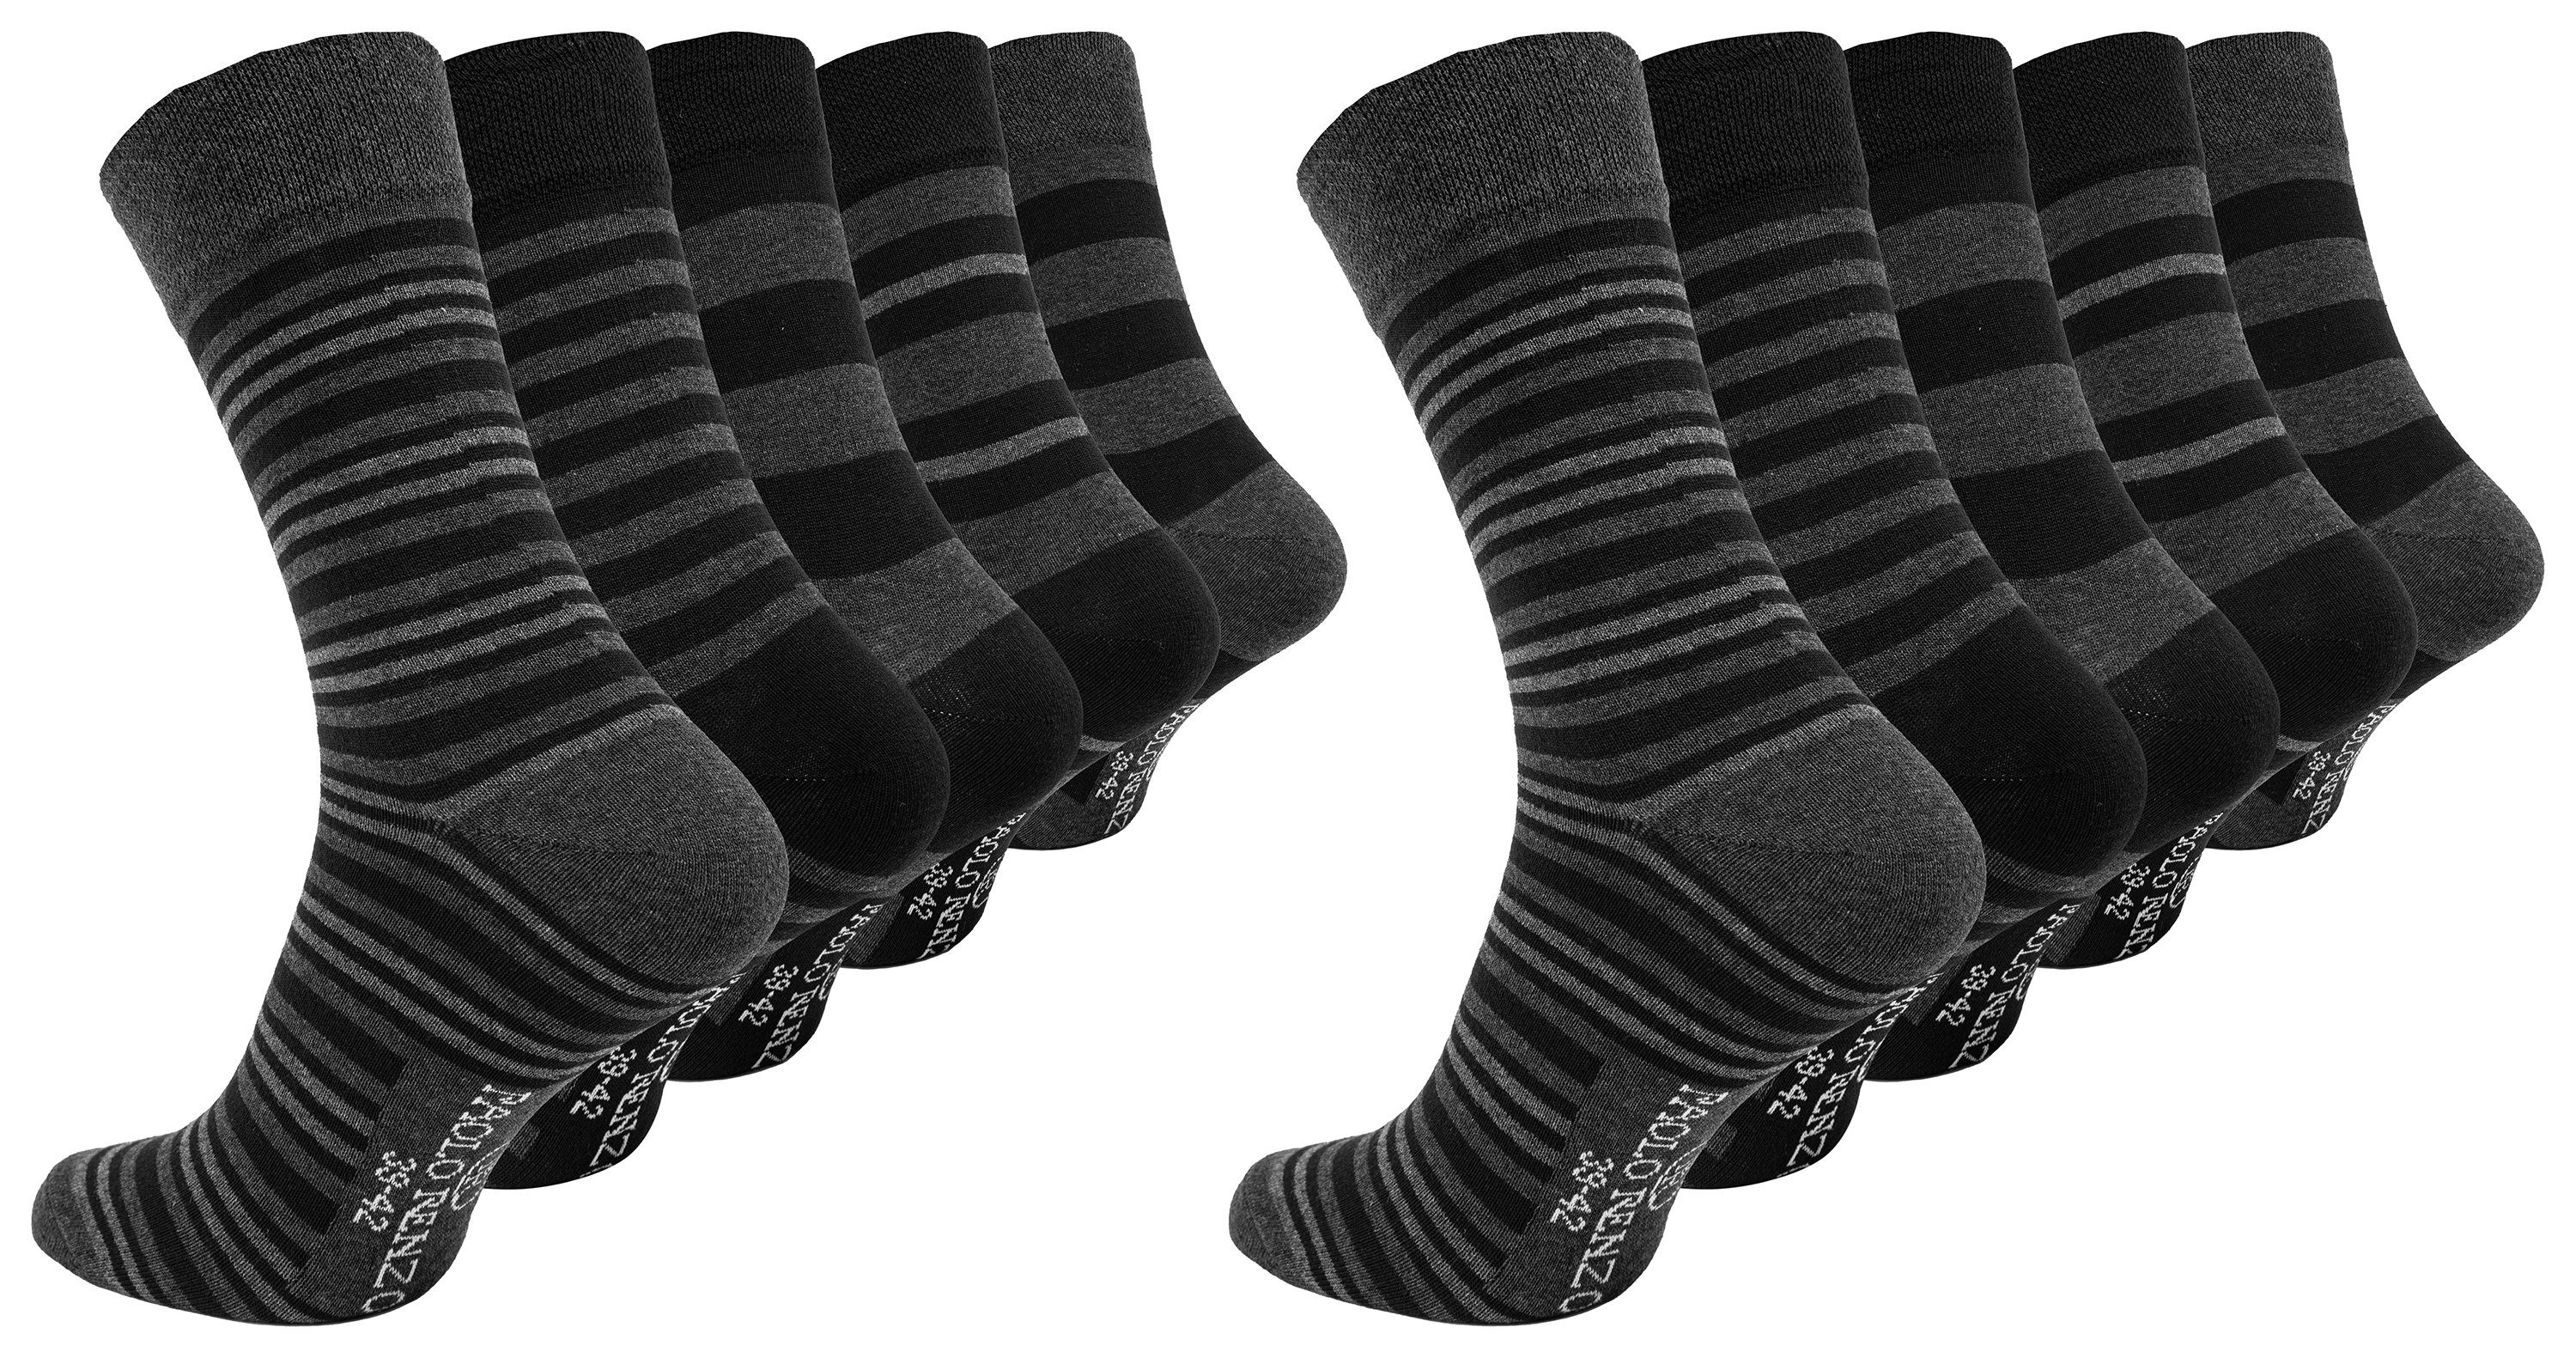 Paolo Renzo Socken Herren Baumwolle Businesssocken Atmungsaktive aus (10-Paar) Business hochwertiger